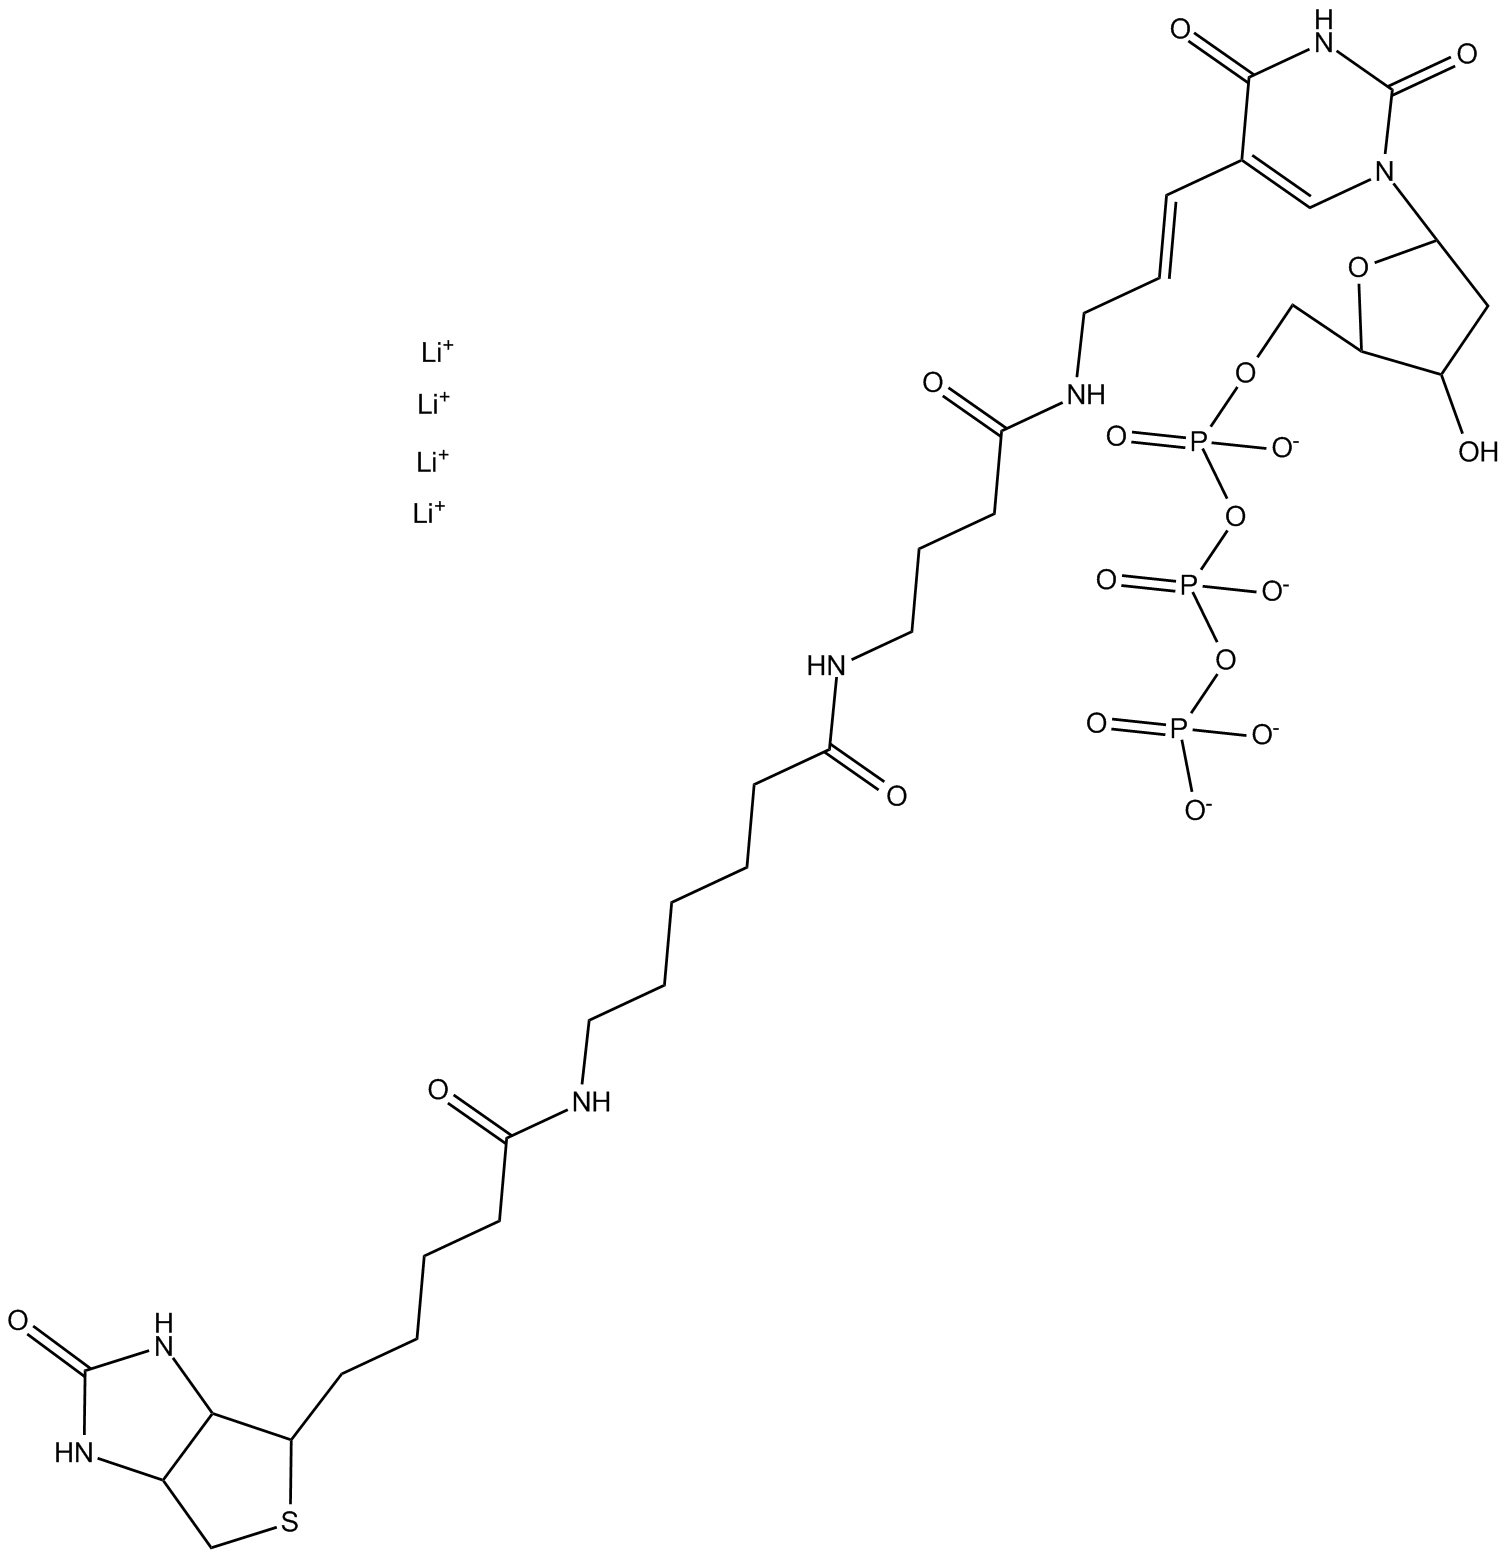 Biotin-16-dUTP  Chemical Structure